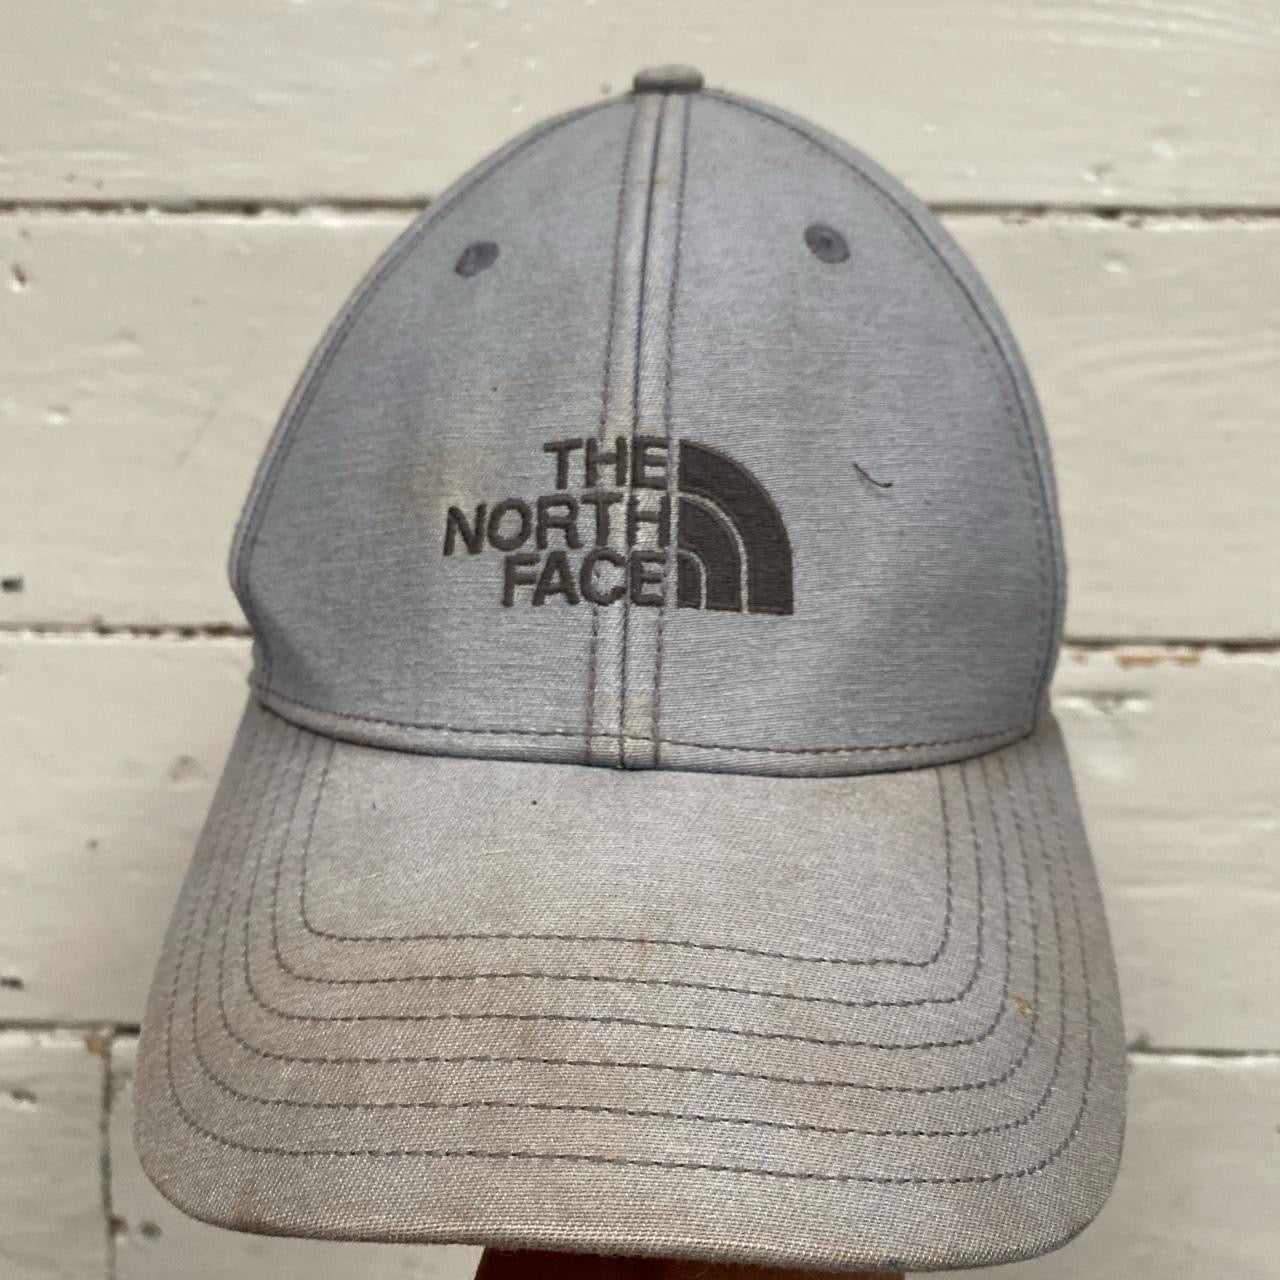 The North Face Grey Cap